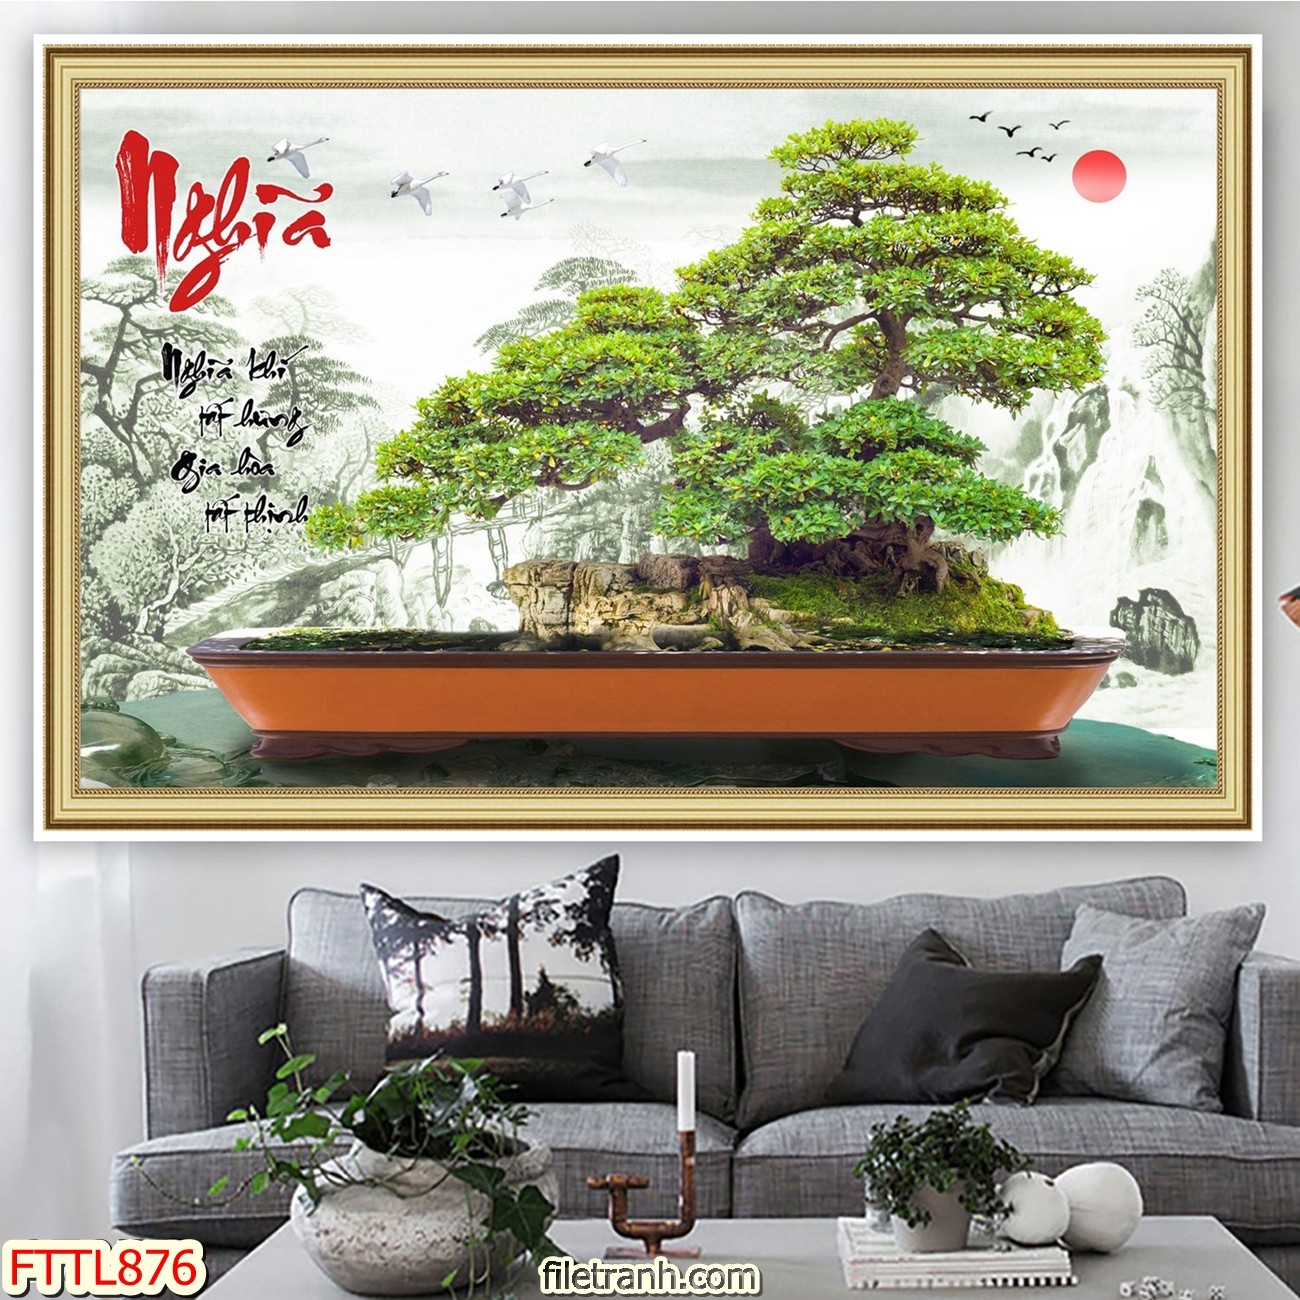 http://filetranh.com/file-tranh-chau-mai-bonsai/file-tranh-chau-mai-bonsai-fttl876.html